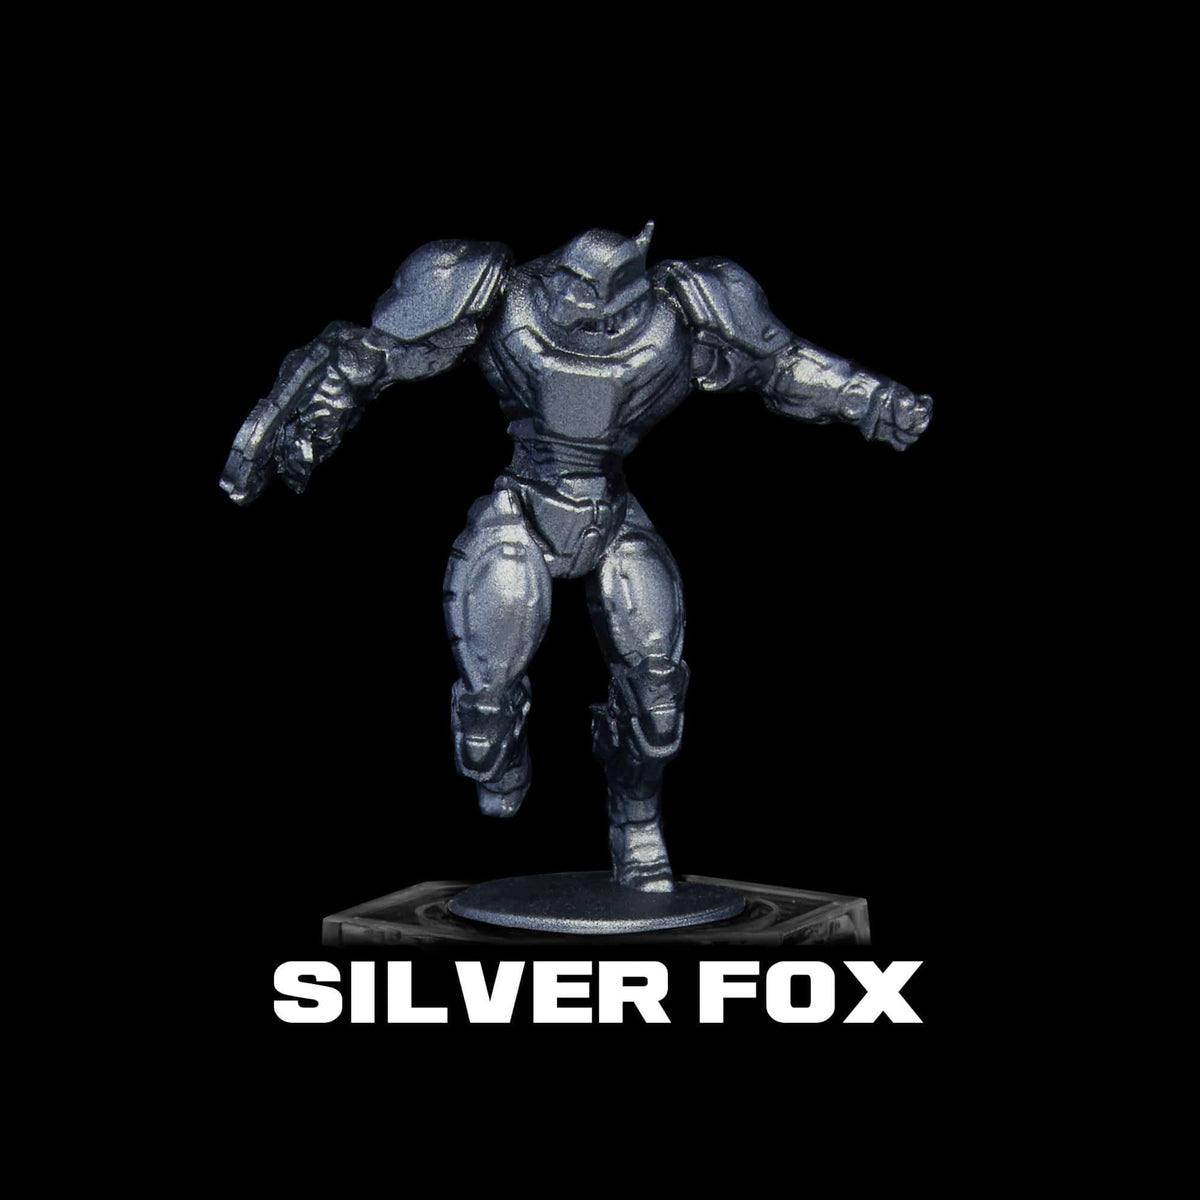 Silver Fox Metallic Acrylic Paint Metallic Turbo Dork Exit 23 Games Silver Fox Metallic Acrylic Paint